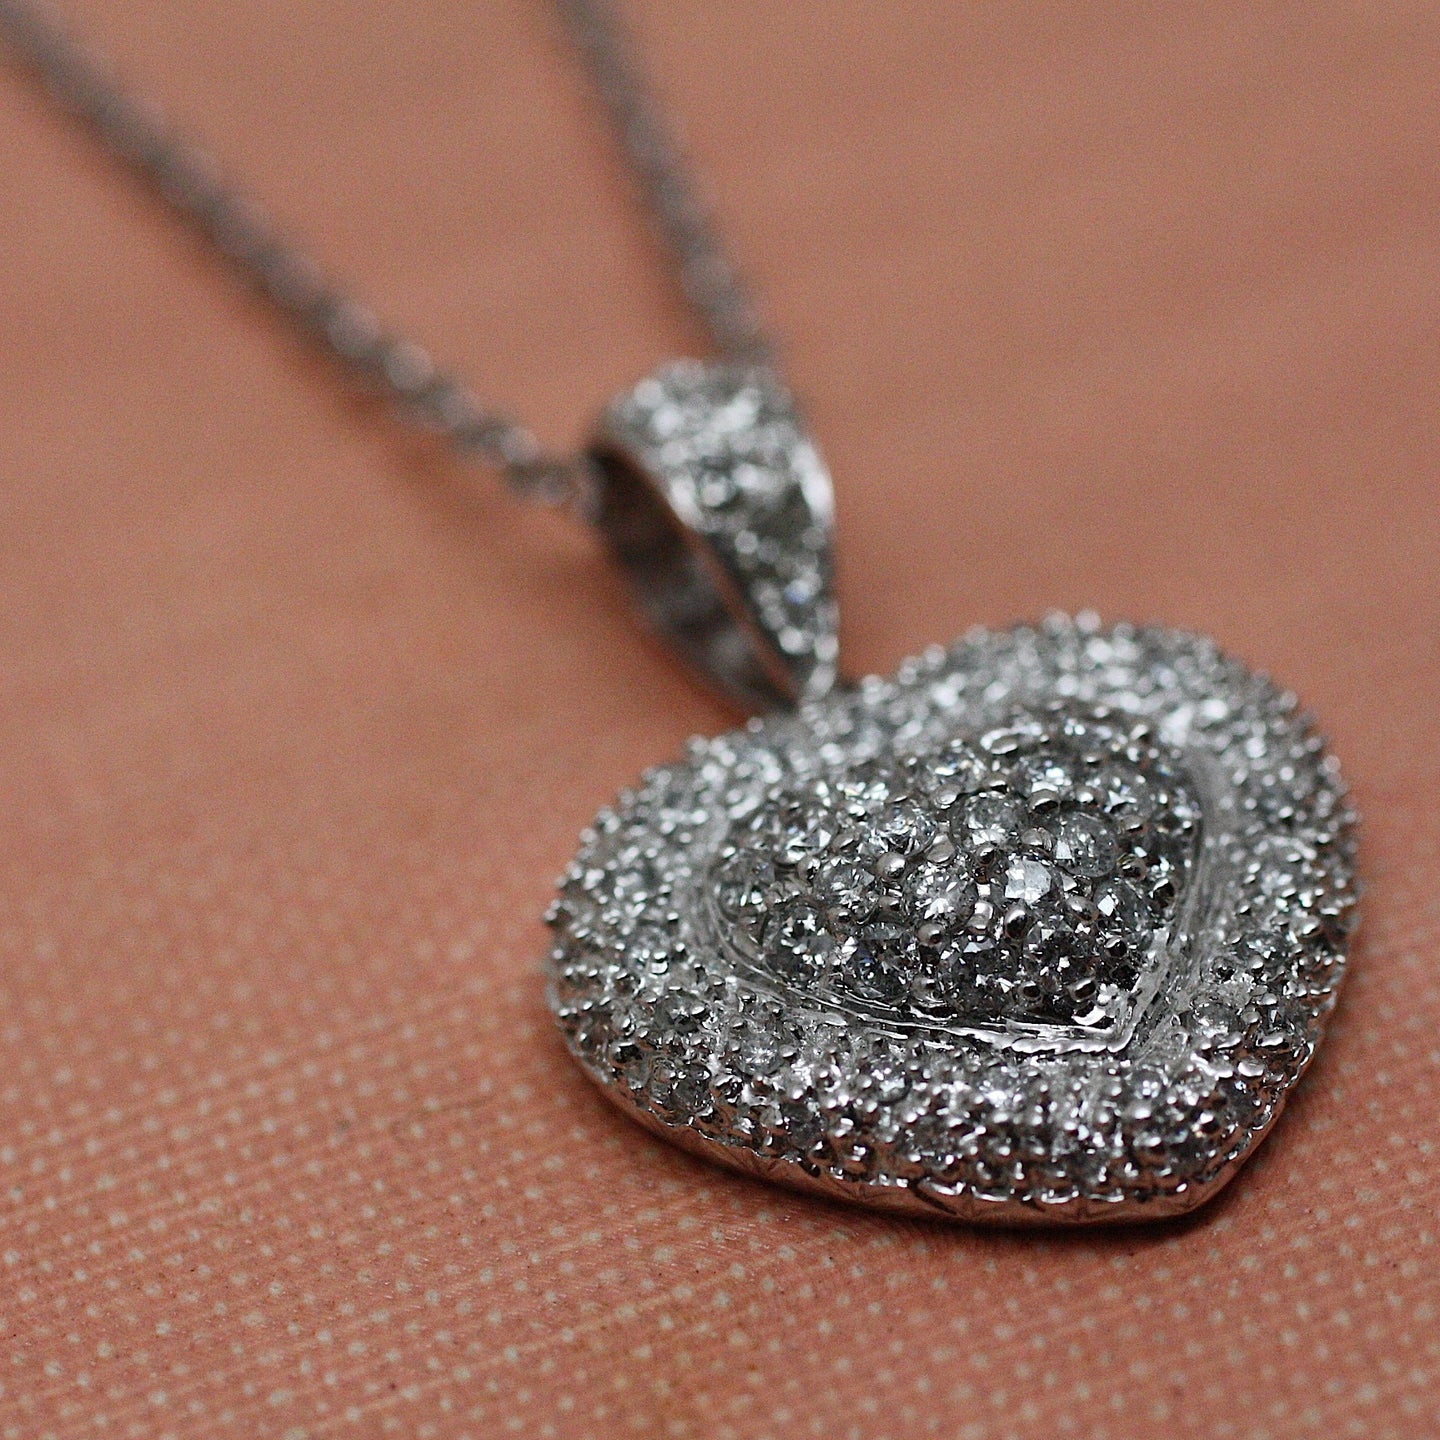 14K Diamond Heart Necklace